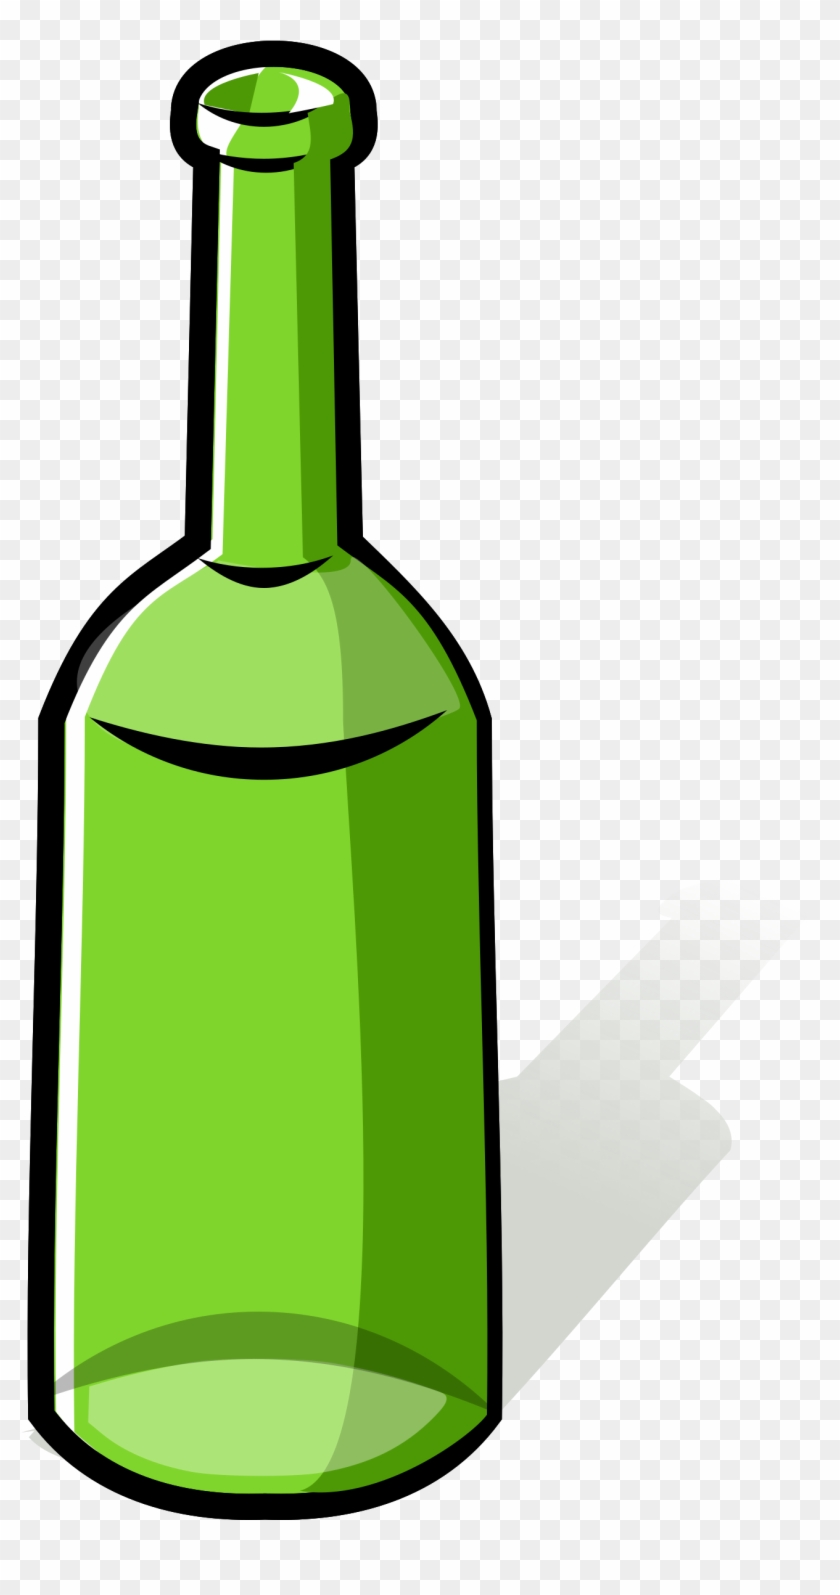 White Wine Glass Bottle Clip Art - White Wine Glass Bottle Clip Art #206992